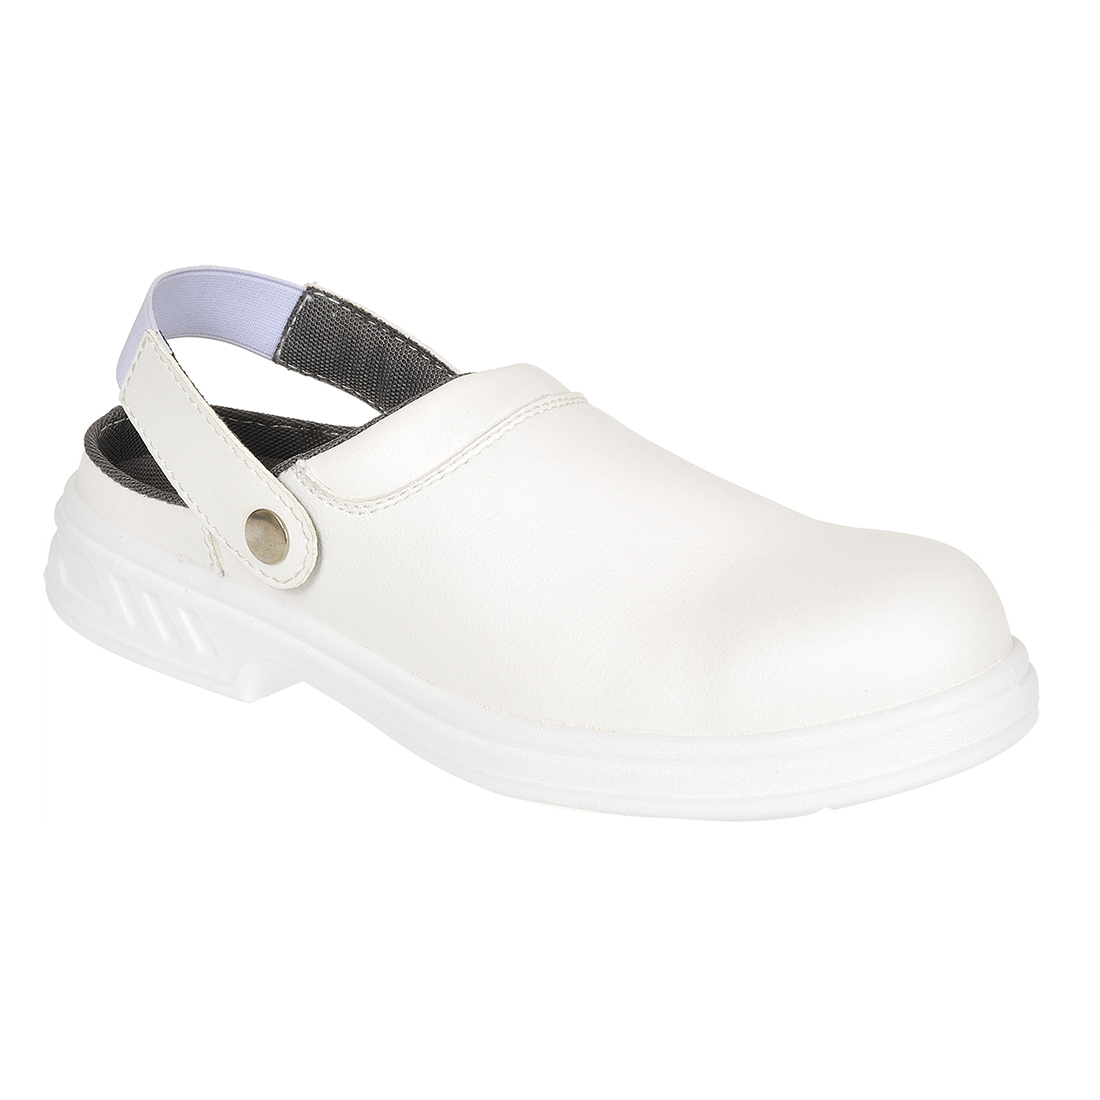 Pracovní sandál Steelite Safety Clog SB AE WRU Barva: bílá, Velikost: 44